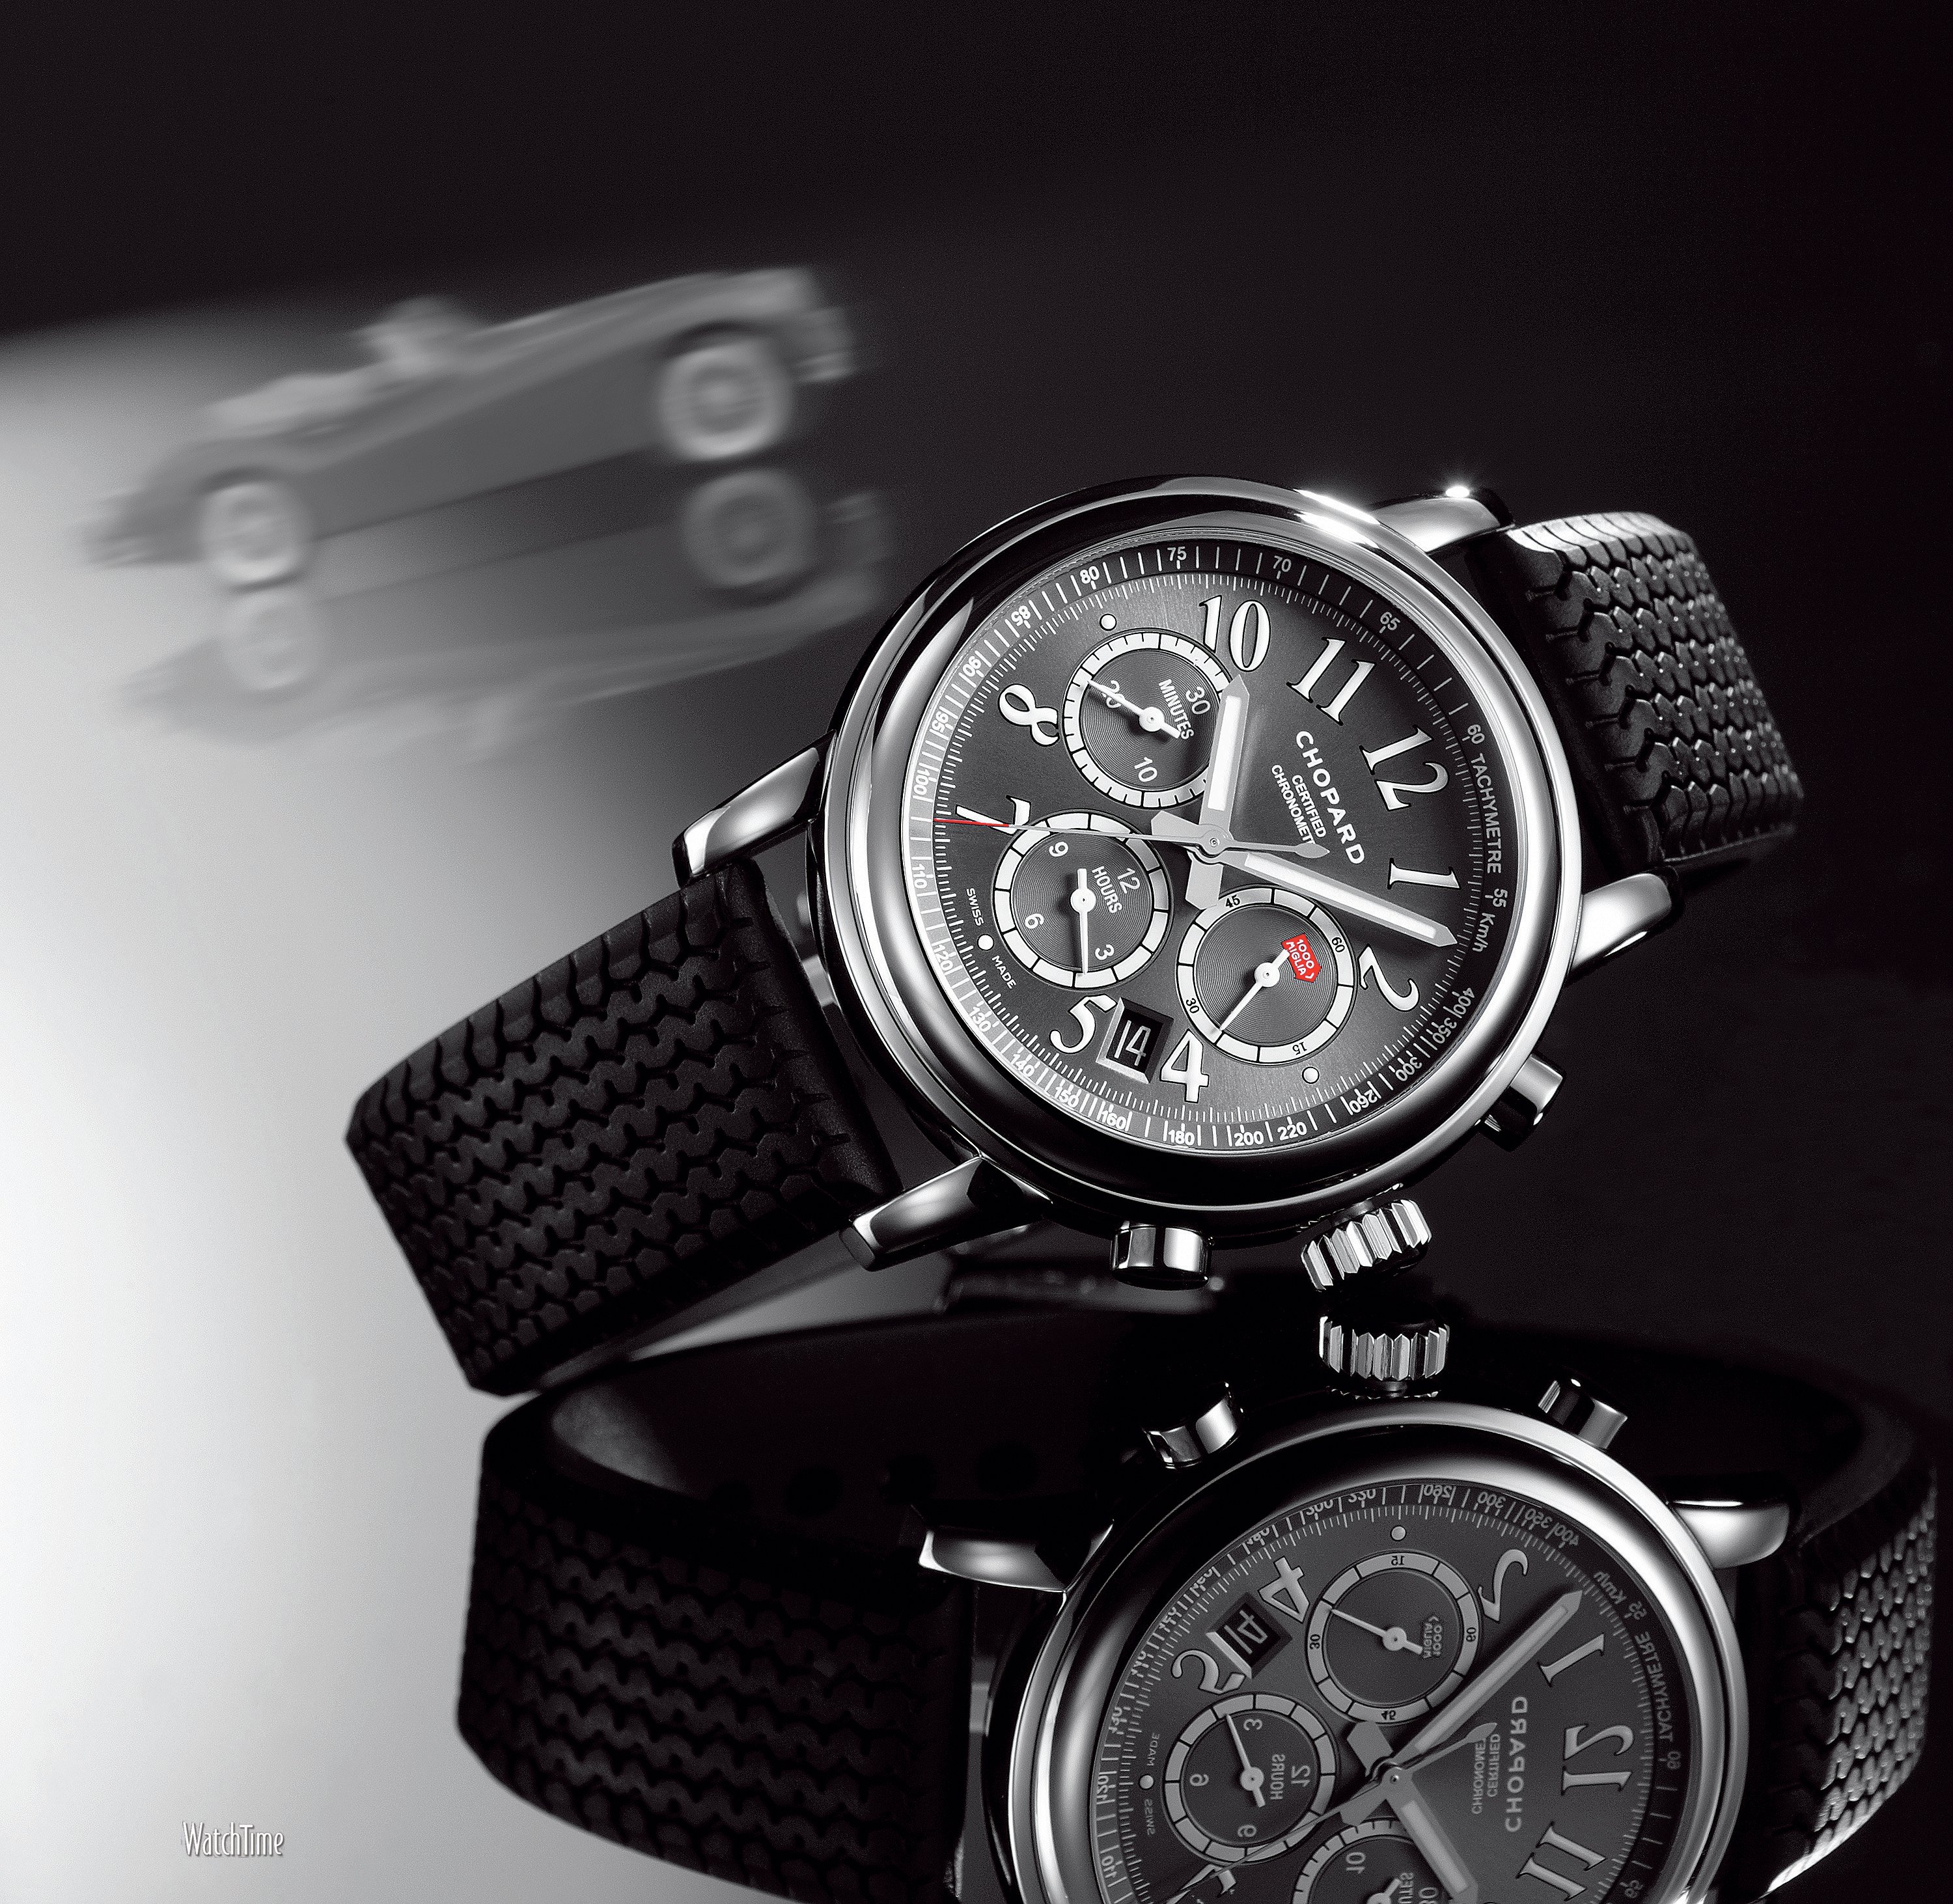 Watch Wallpaper: Sport Specific Watches. WatchTime's No.1 Watch Magazine